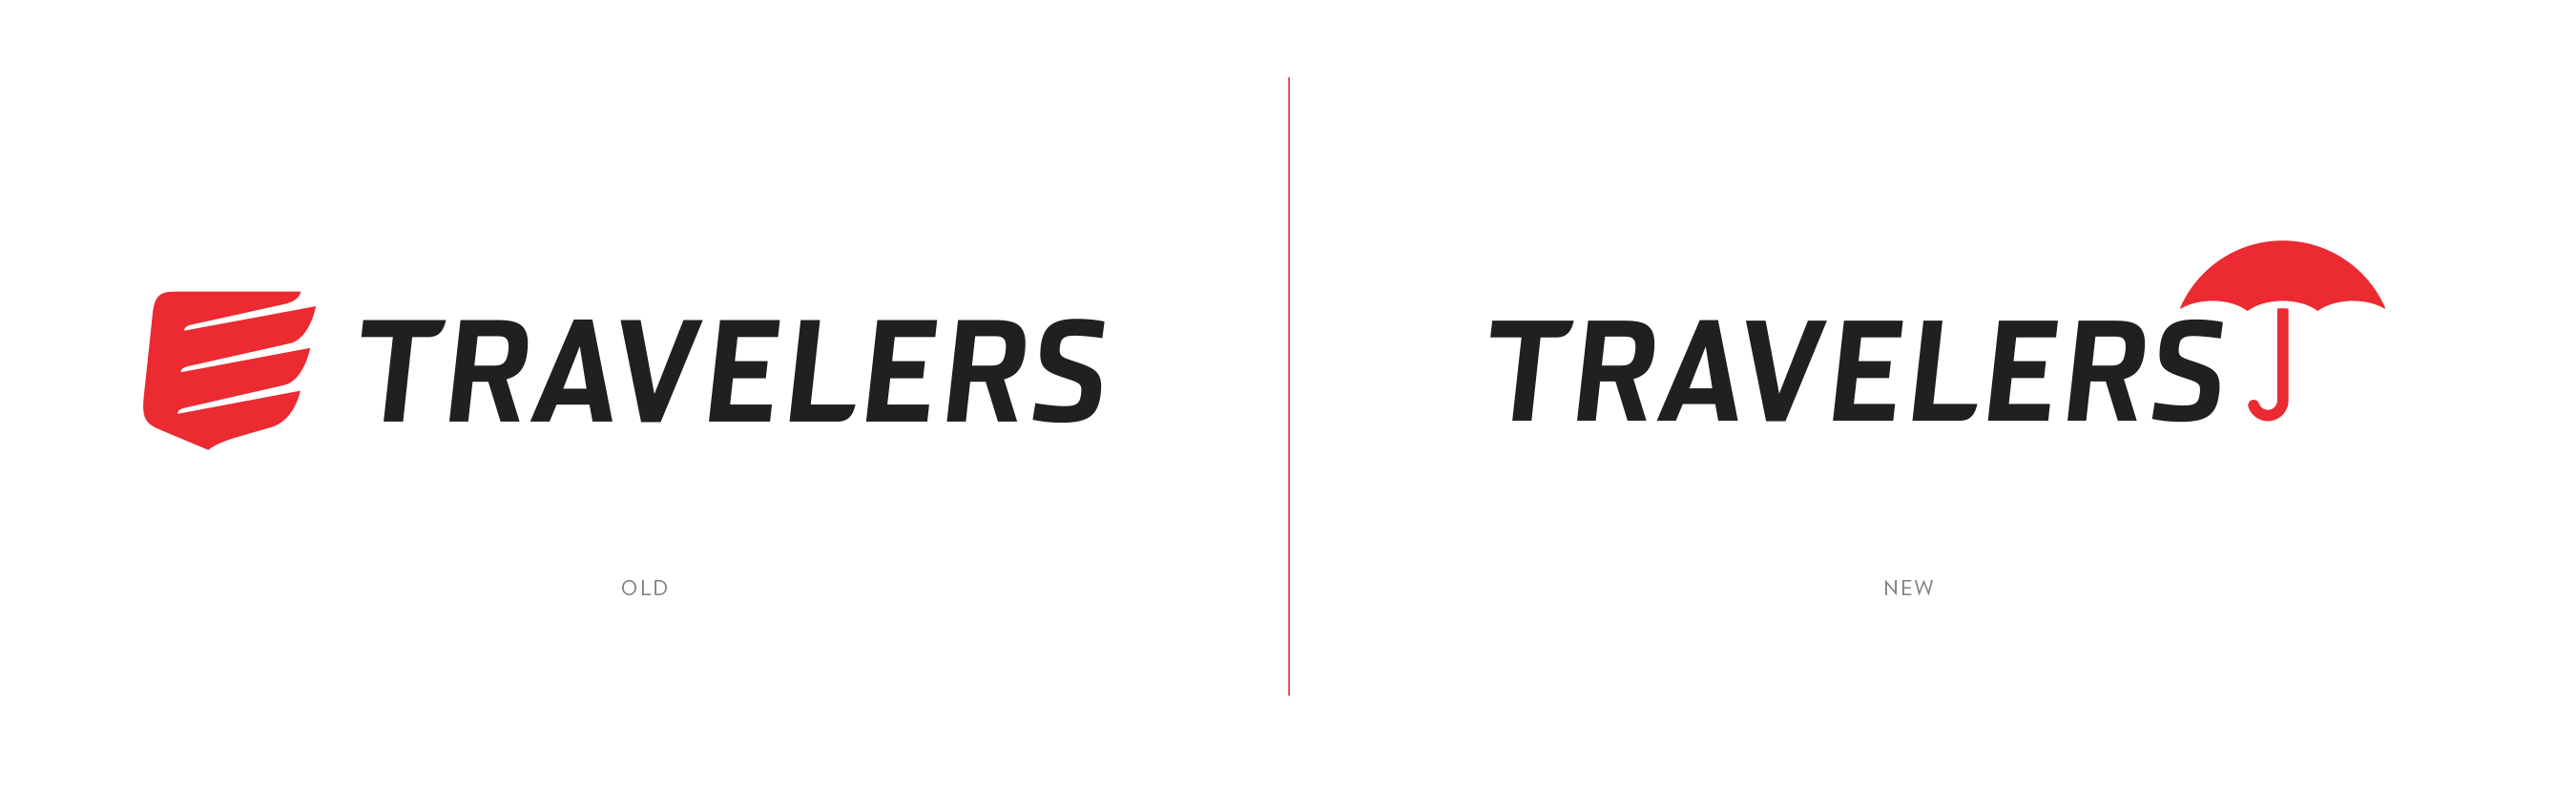 Red Umbrella Travelers Logo - Travelers Insurance - Replace